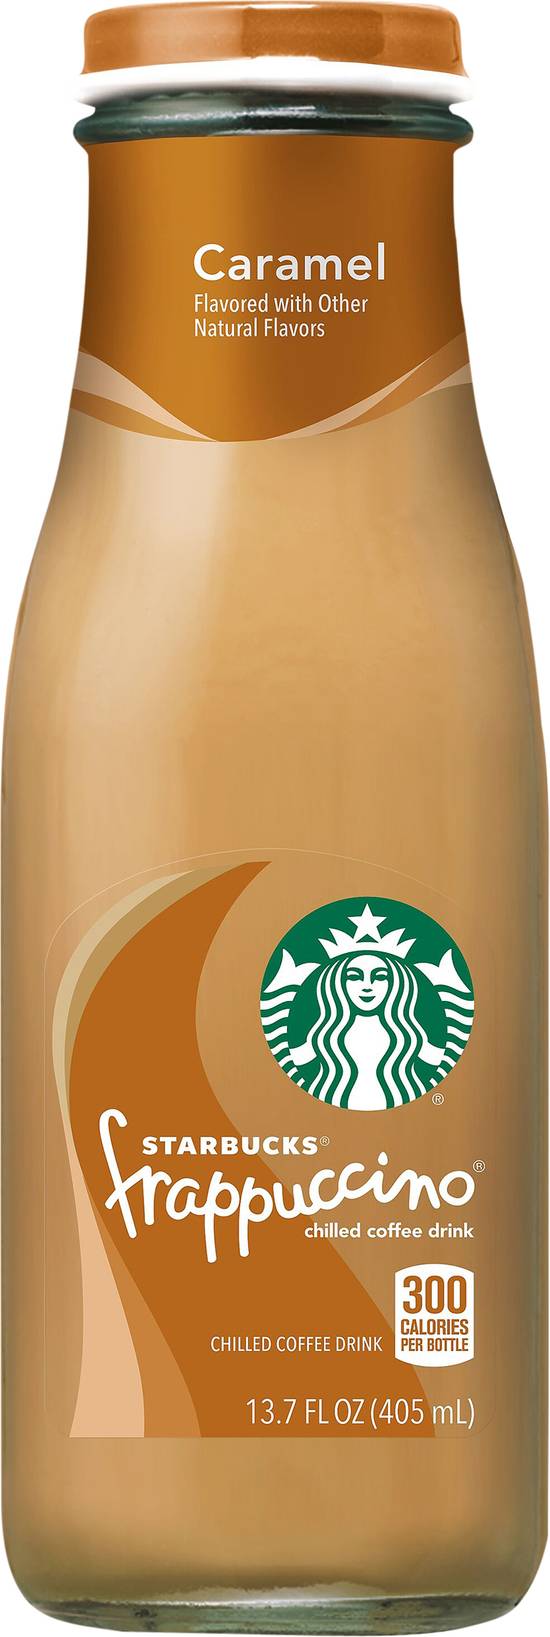 Starbucks Frappuccino Chilled Coffee Drink (13.7 fl oz) ( caramel)